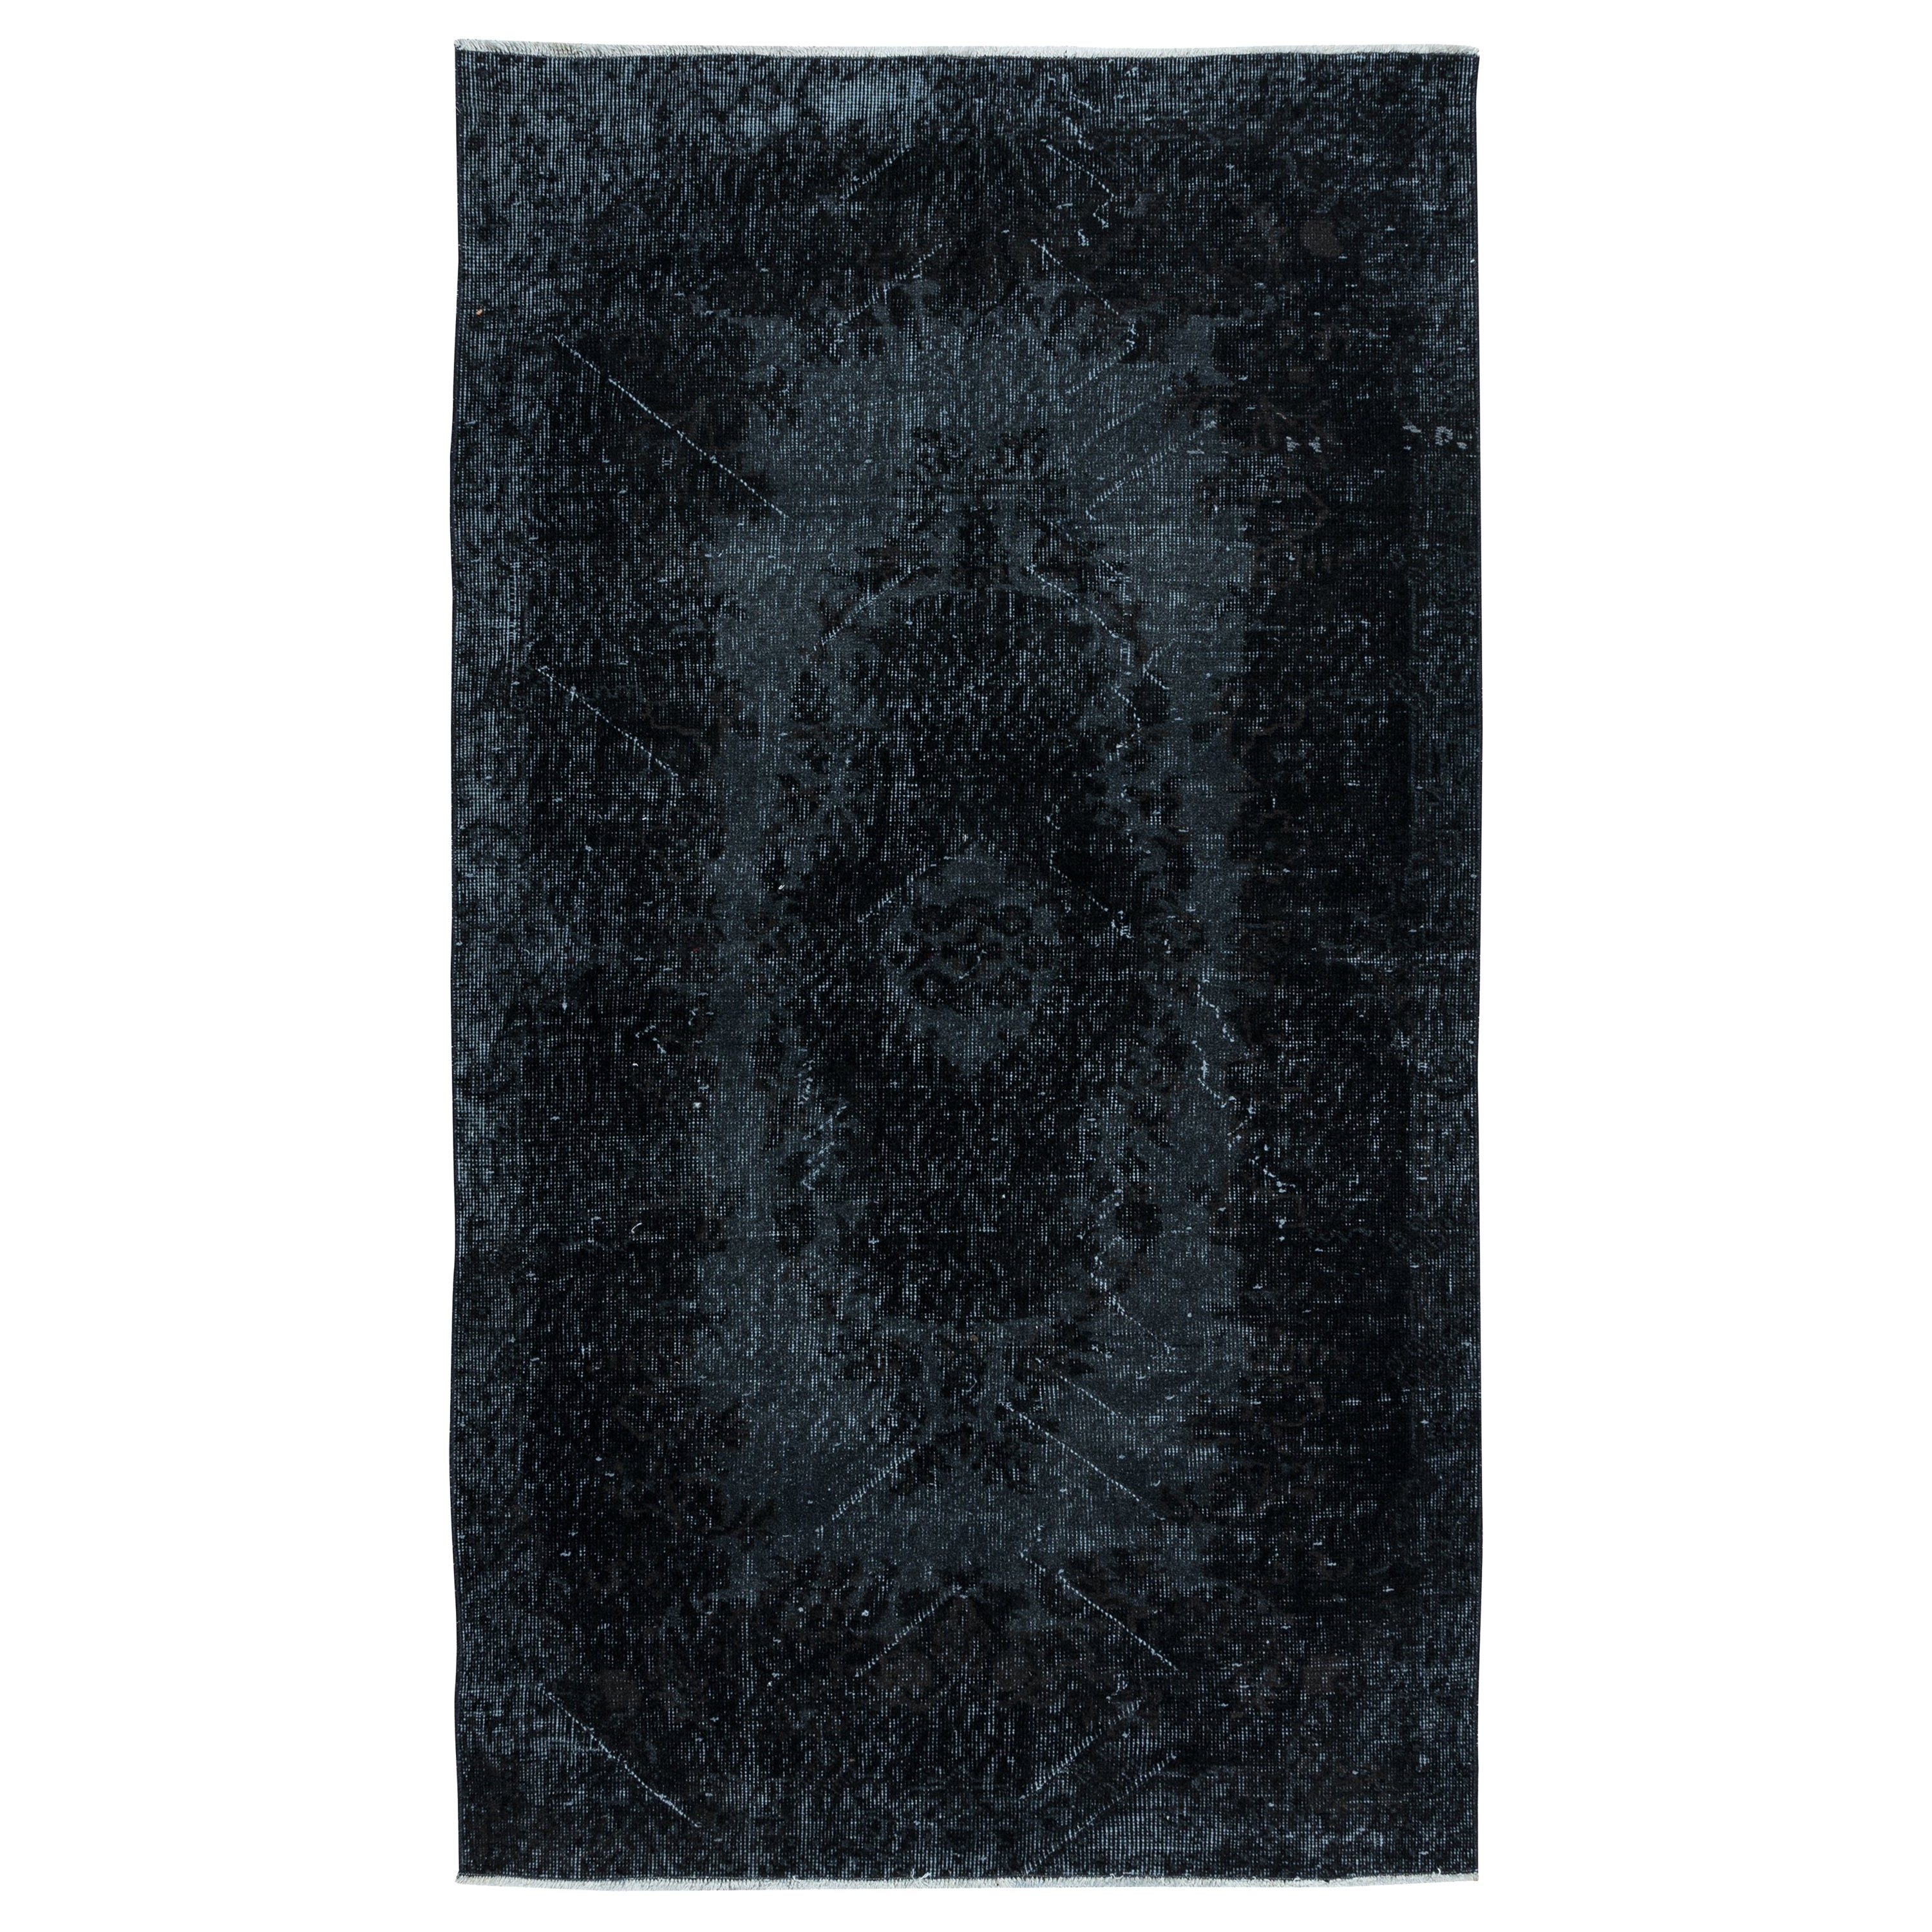 3.8x6.6 Ft Charcoal Gray & Black Living Room Rug, Modern Handmade Turkish Carpet For Sale